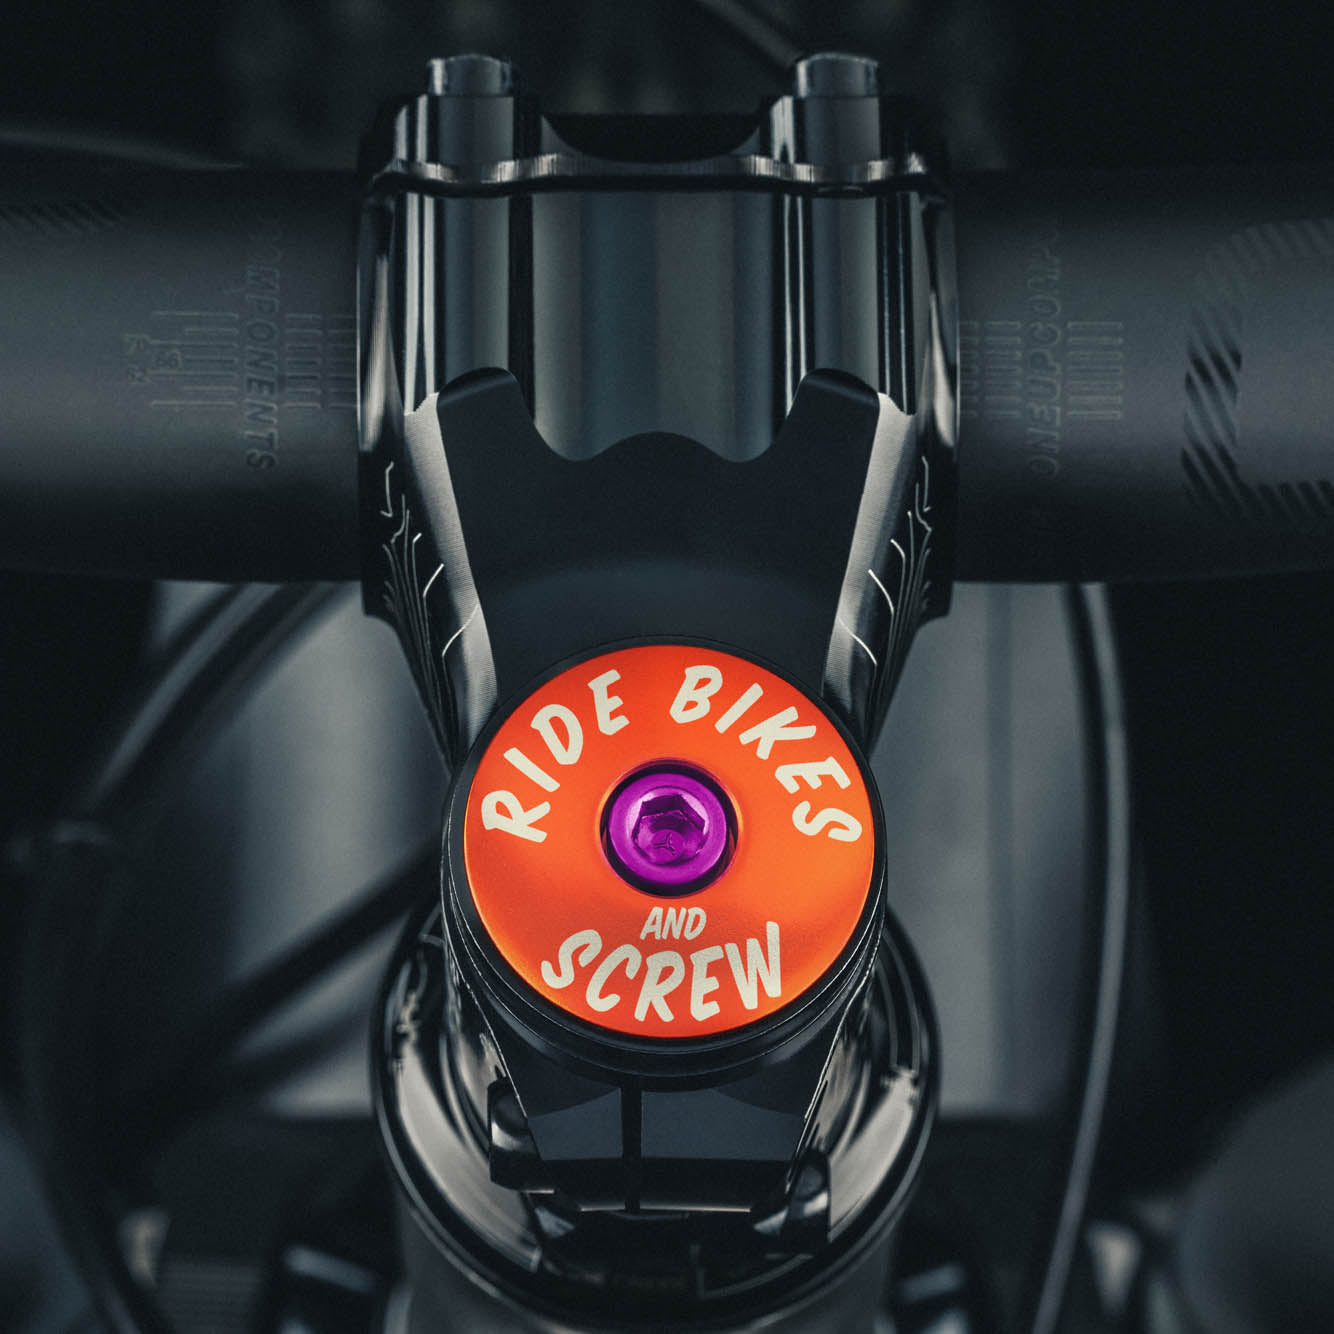 Ride Bikes & Screw Bicycle  Headset Cap